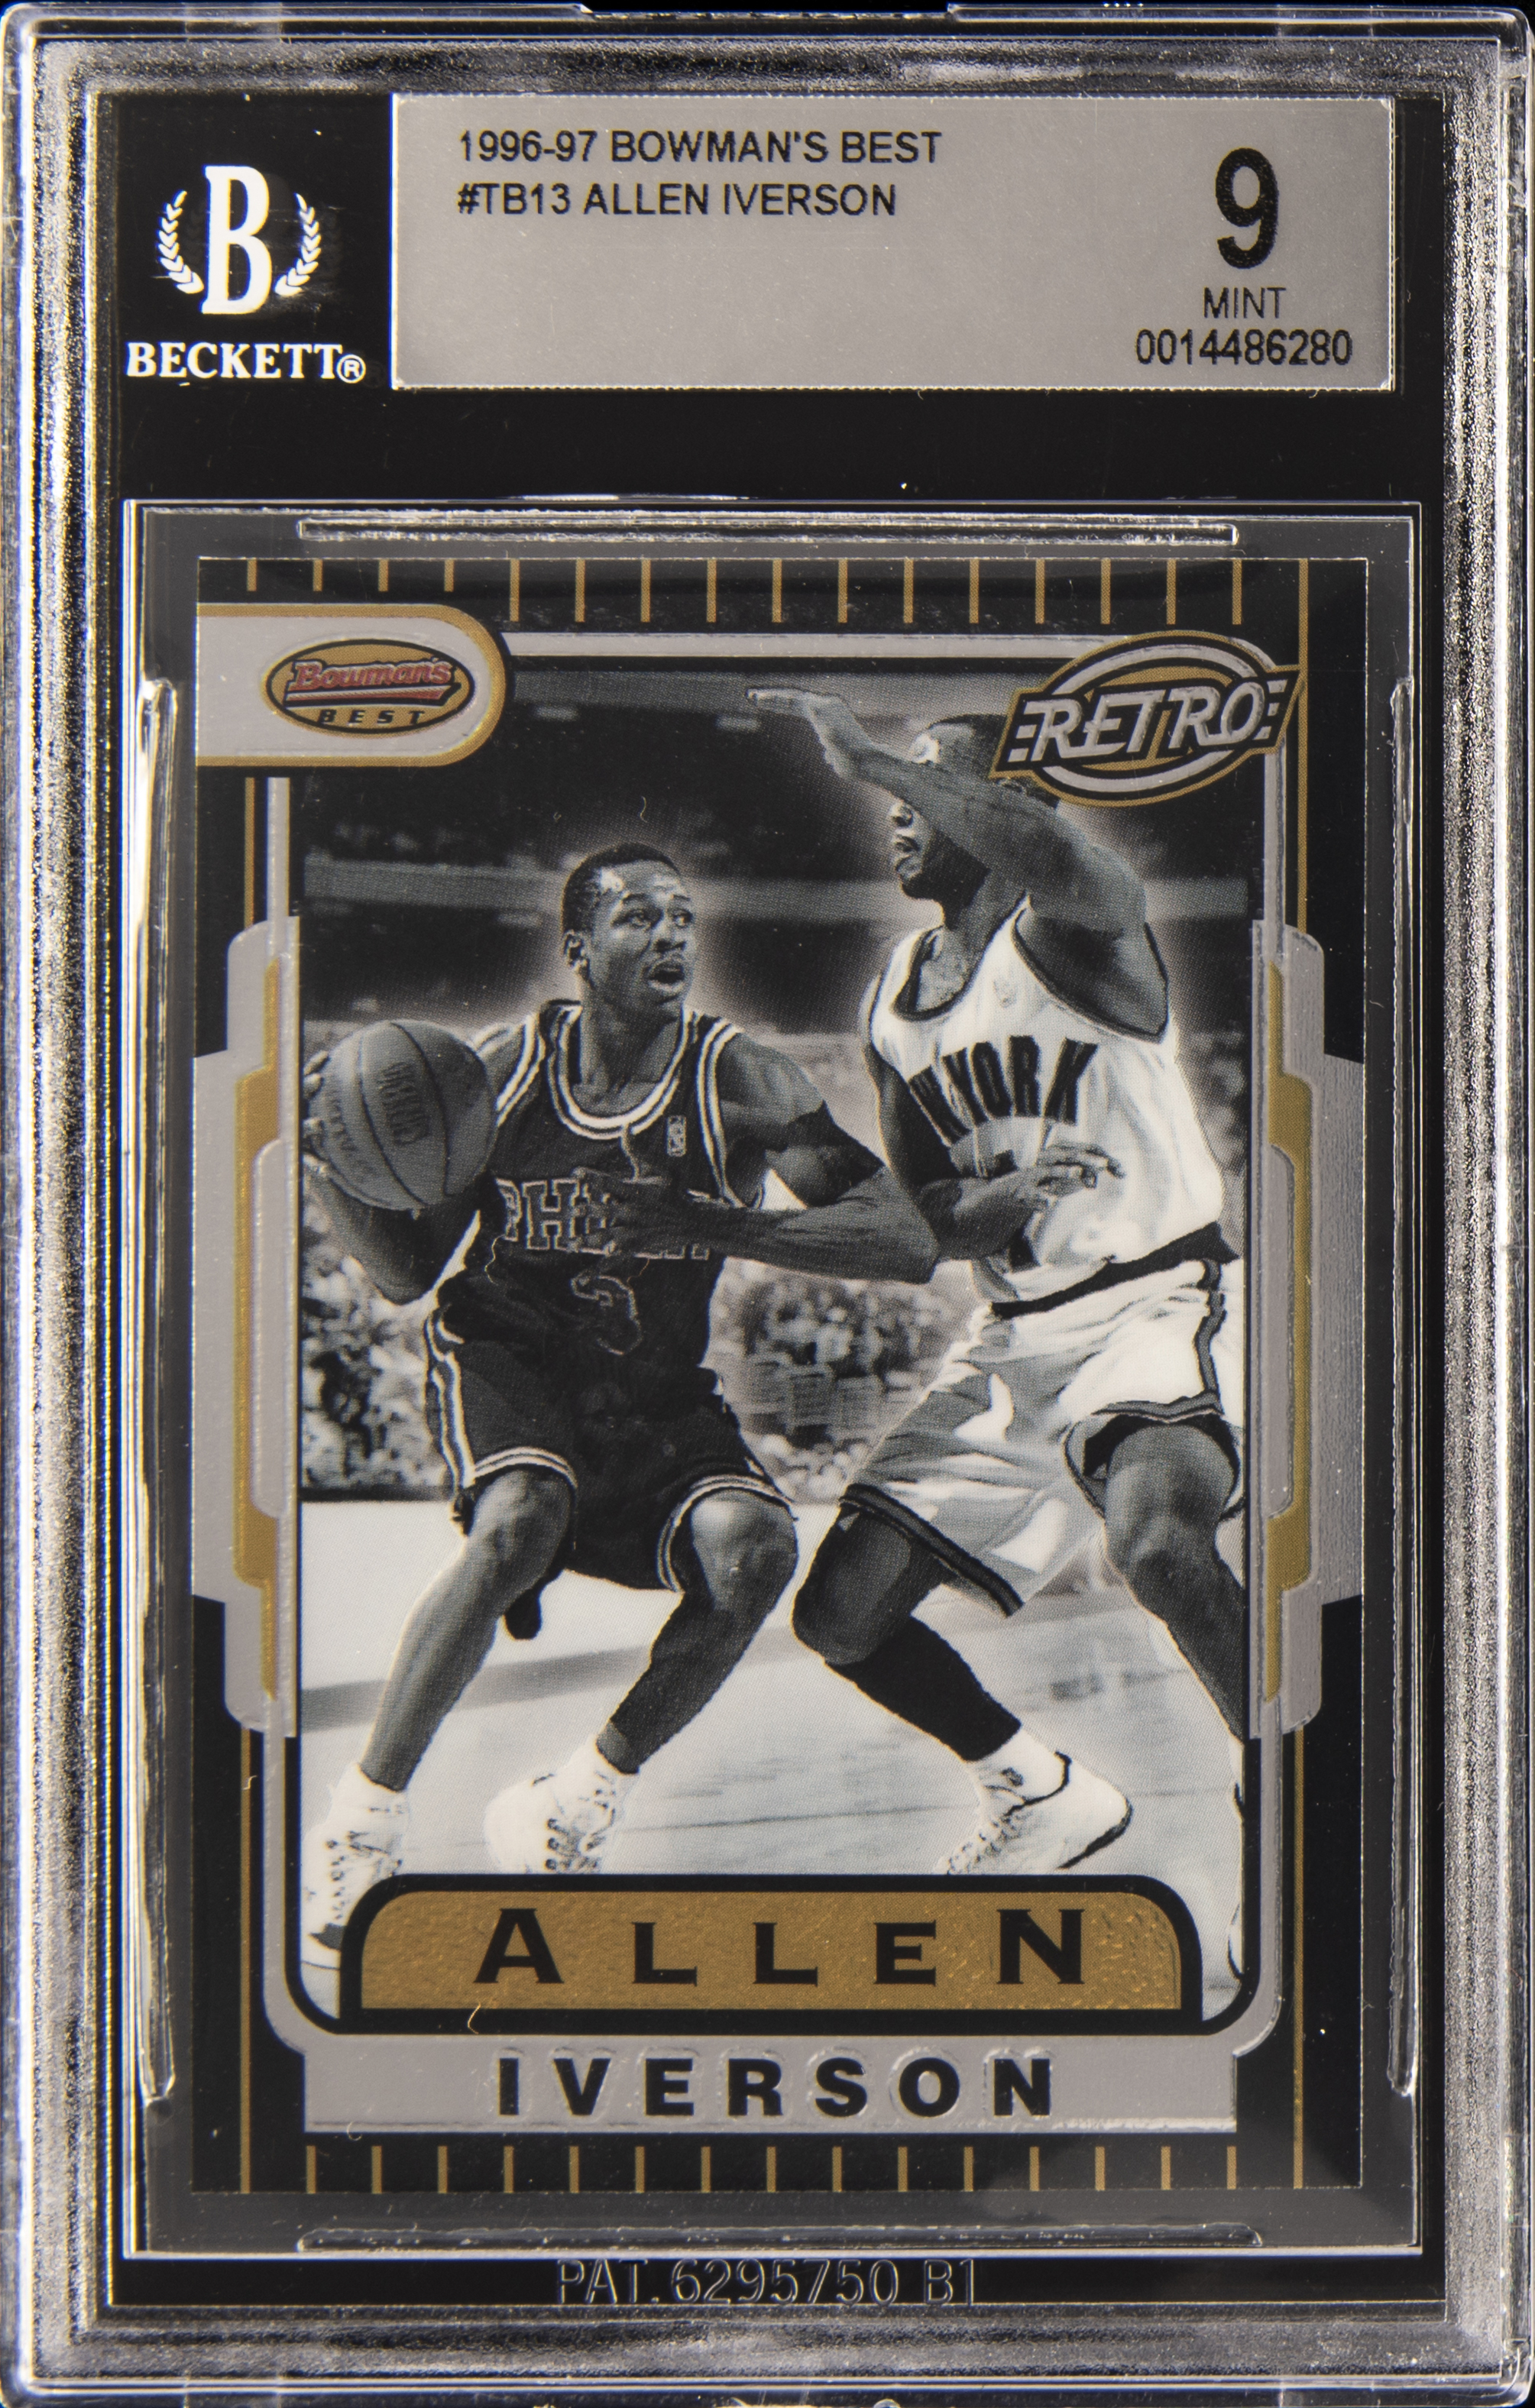 1996-97 Bowman's Best #TB13 Allen Iverson Rookie Card – BGS MINT 9